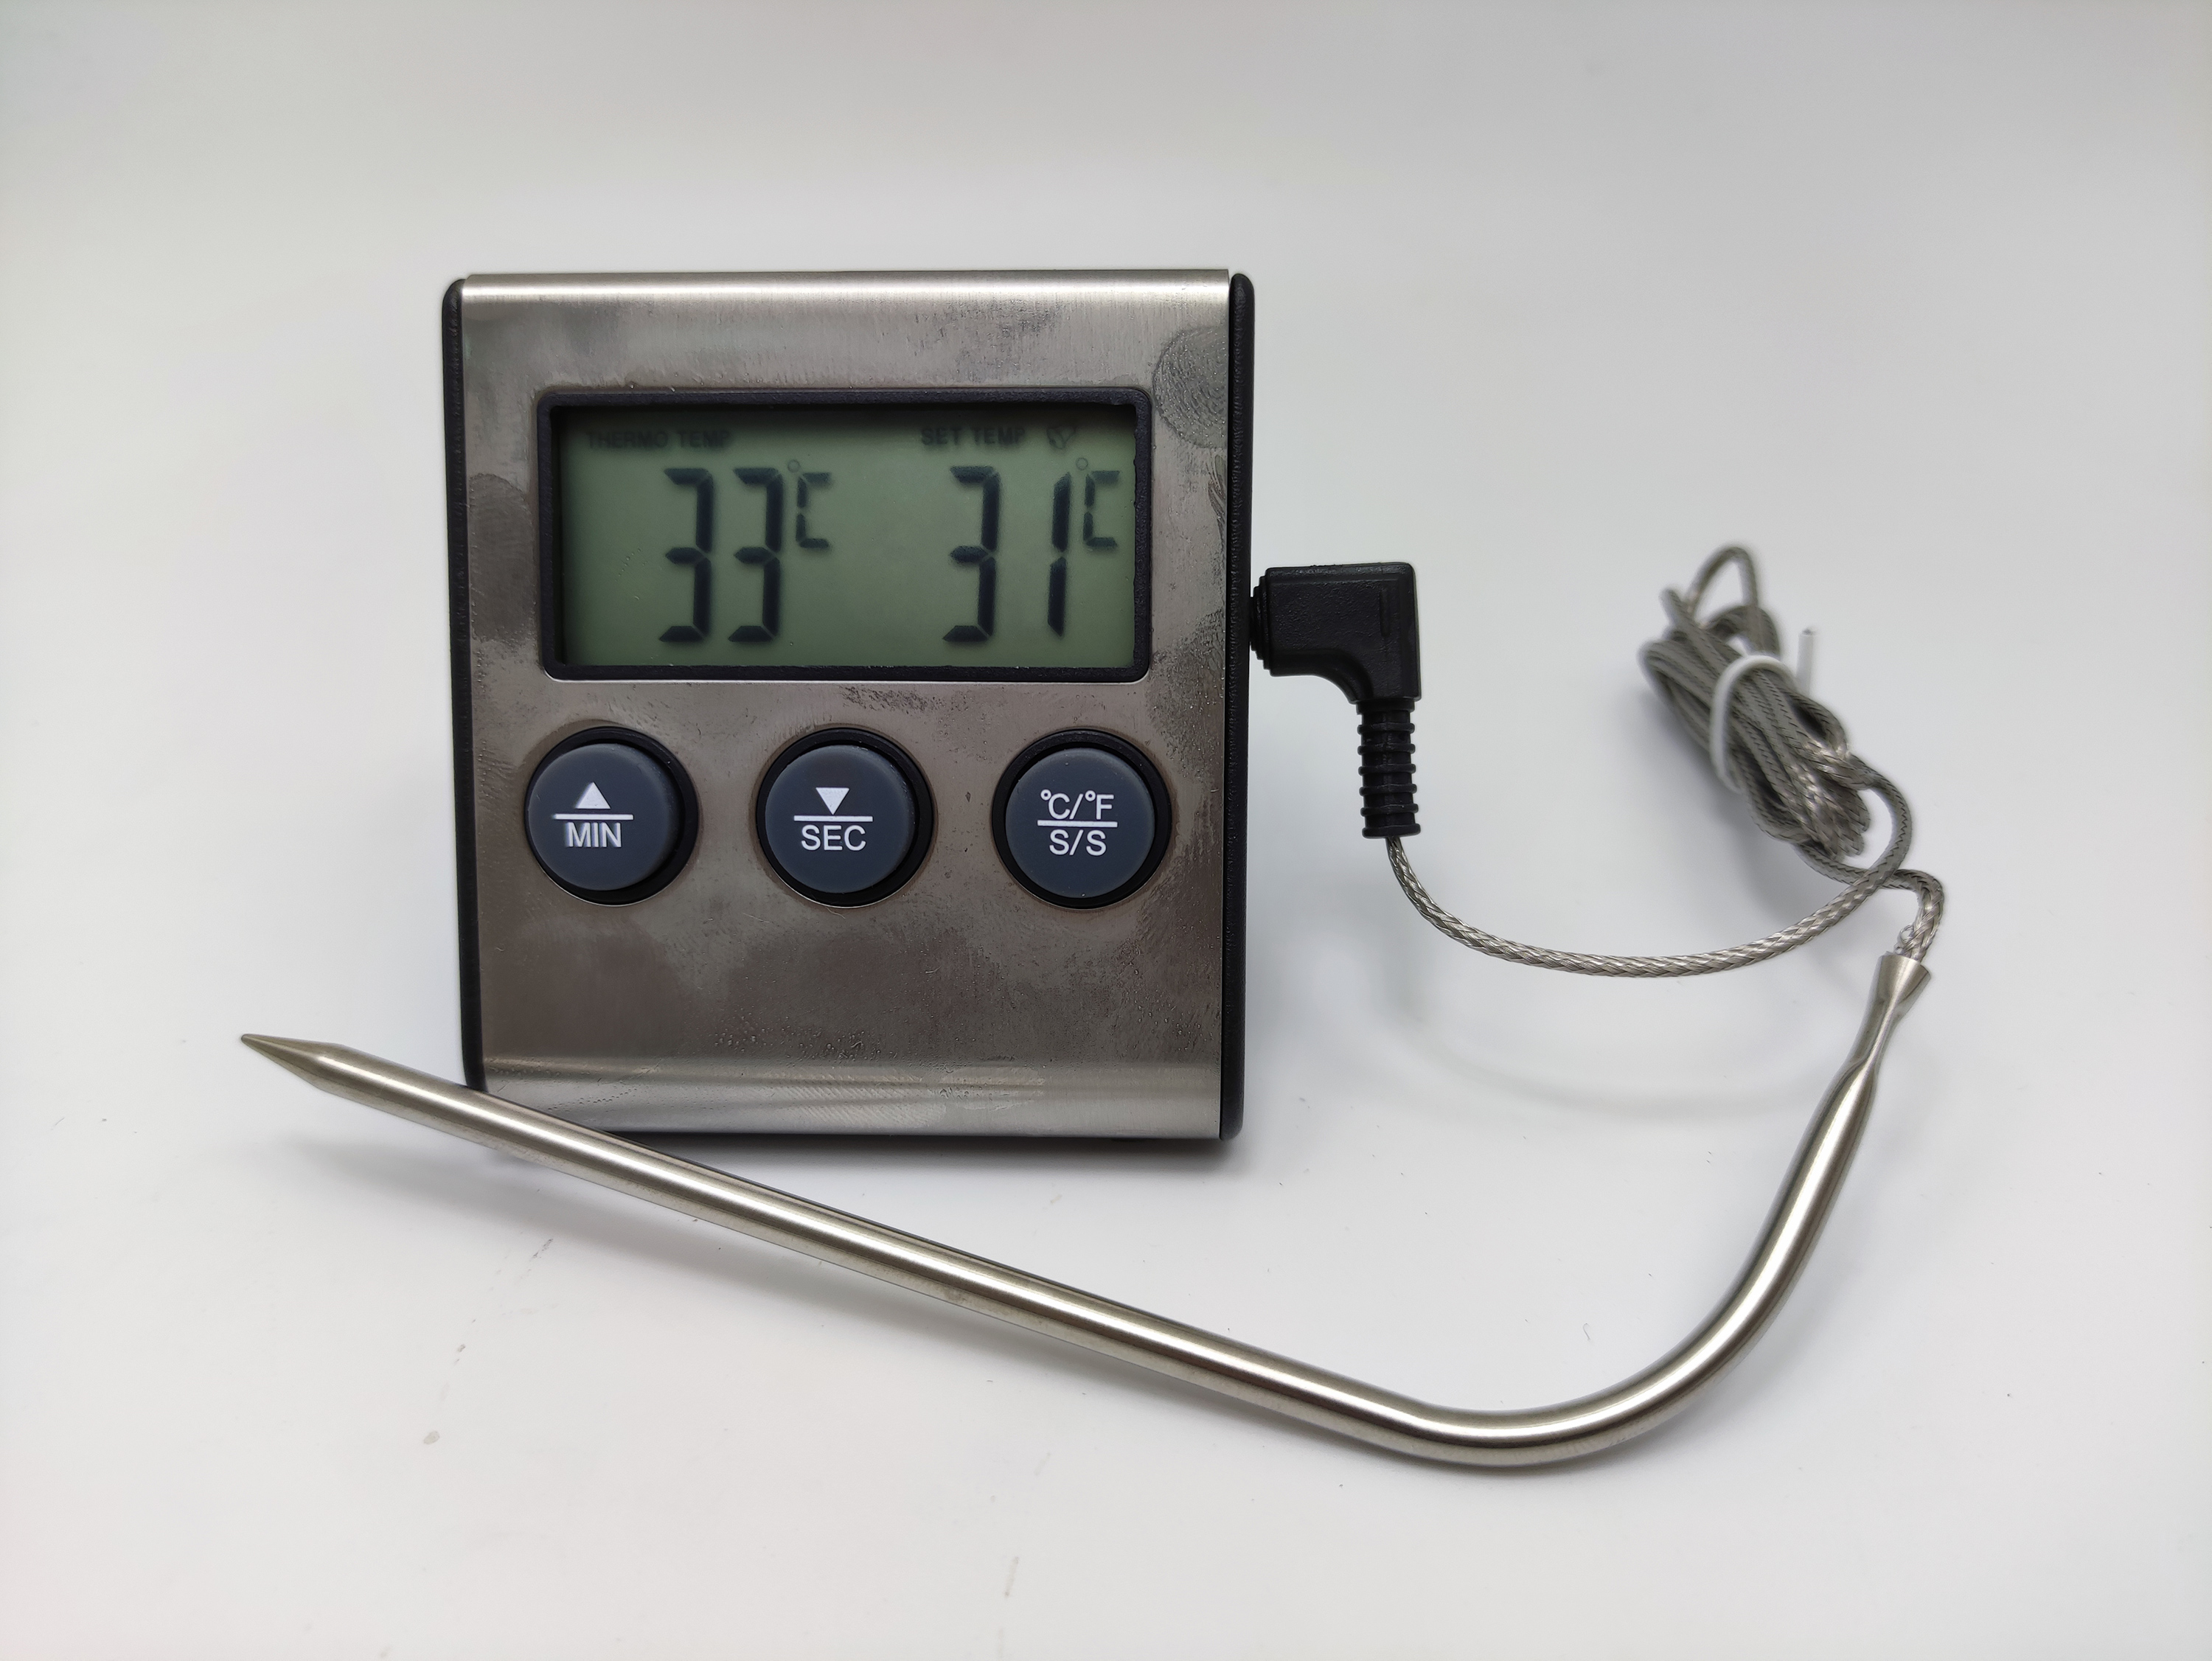 WAS Stainless Digital Thermometer 0-250c (เทอร์มอมิเตอร์อุณหภูมิ 0-250 องศาเซลเซียส)